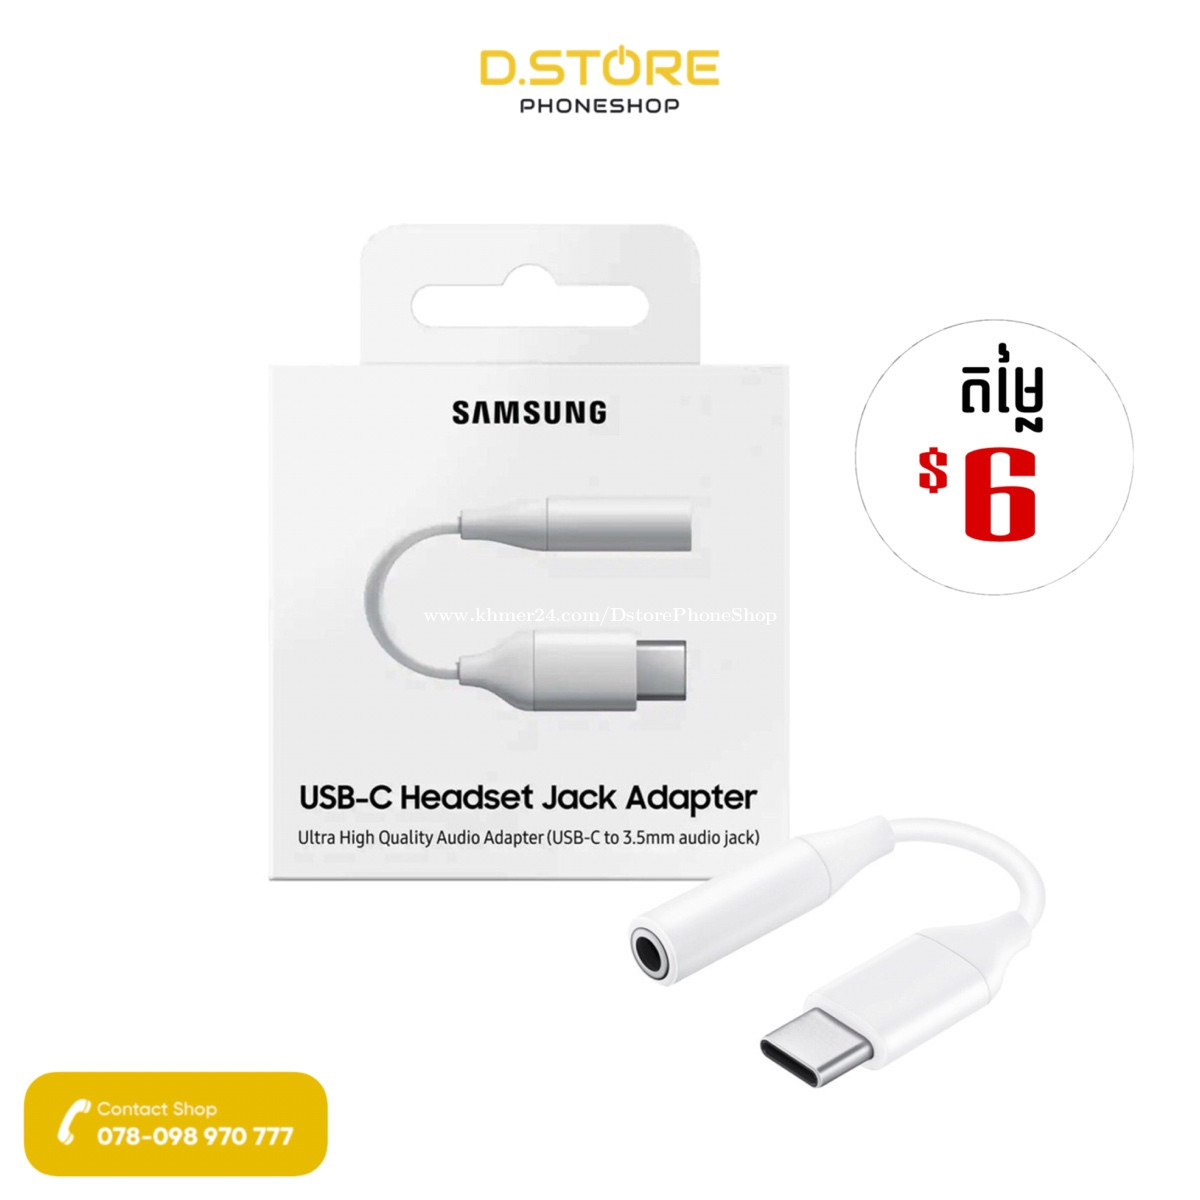 Samsung USB-C Headset Jack Adapter - Black & White price $6.00 in